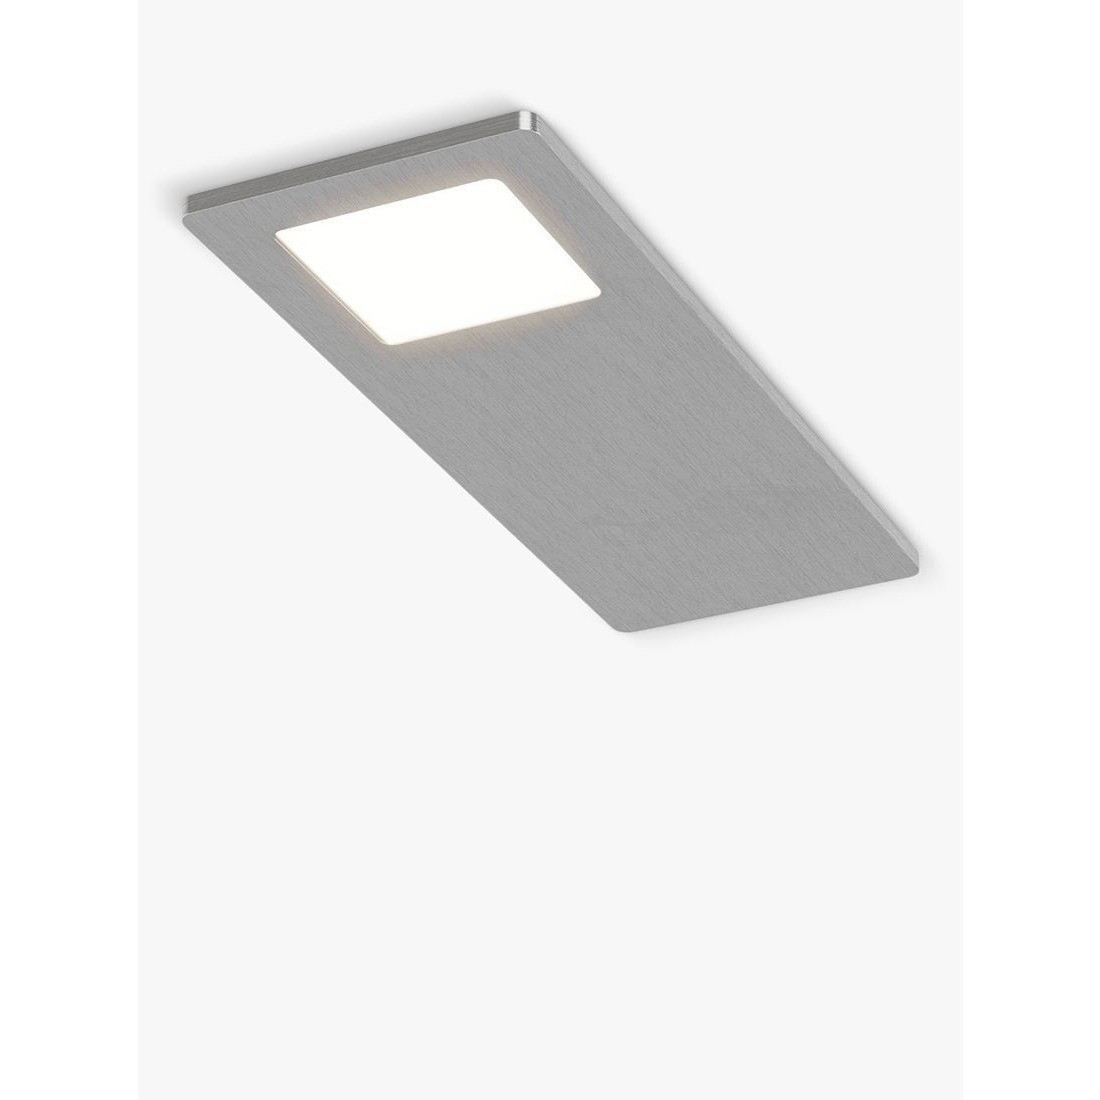 Sensio Velos LED Under Kitchen Cabinet Light, Natural White Light - image 1